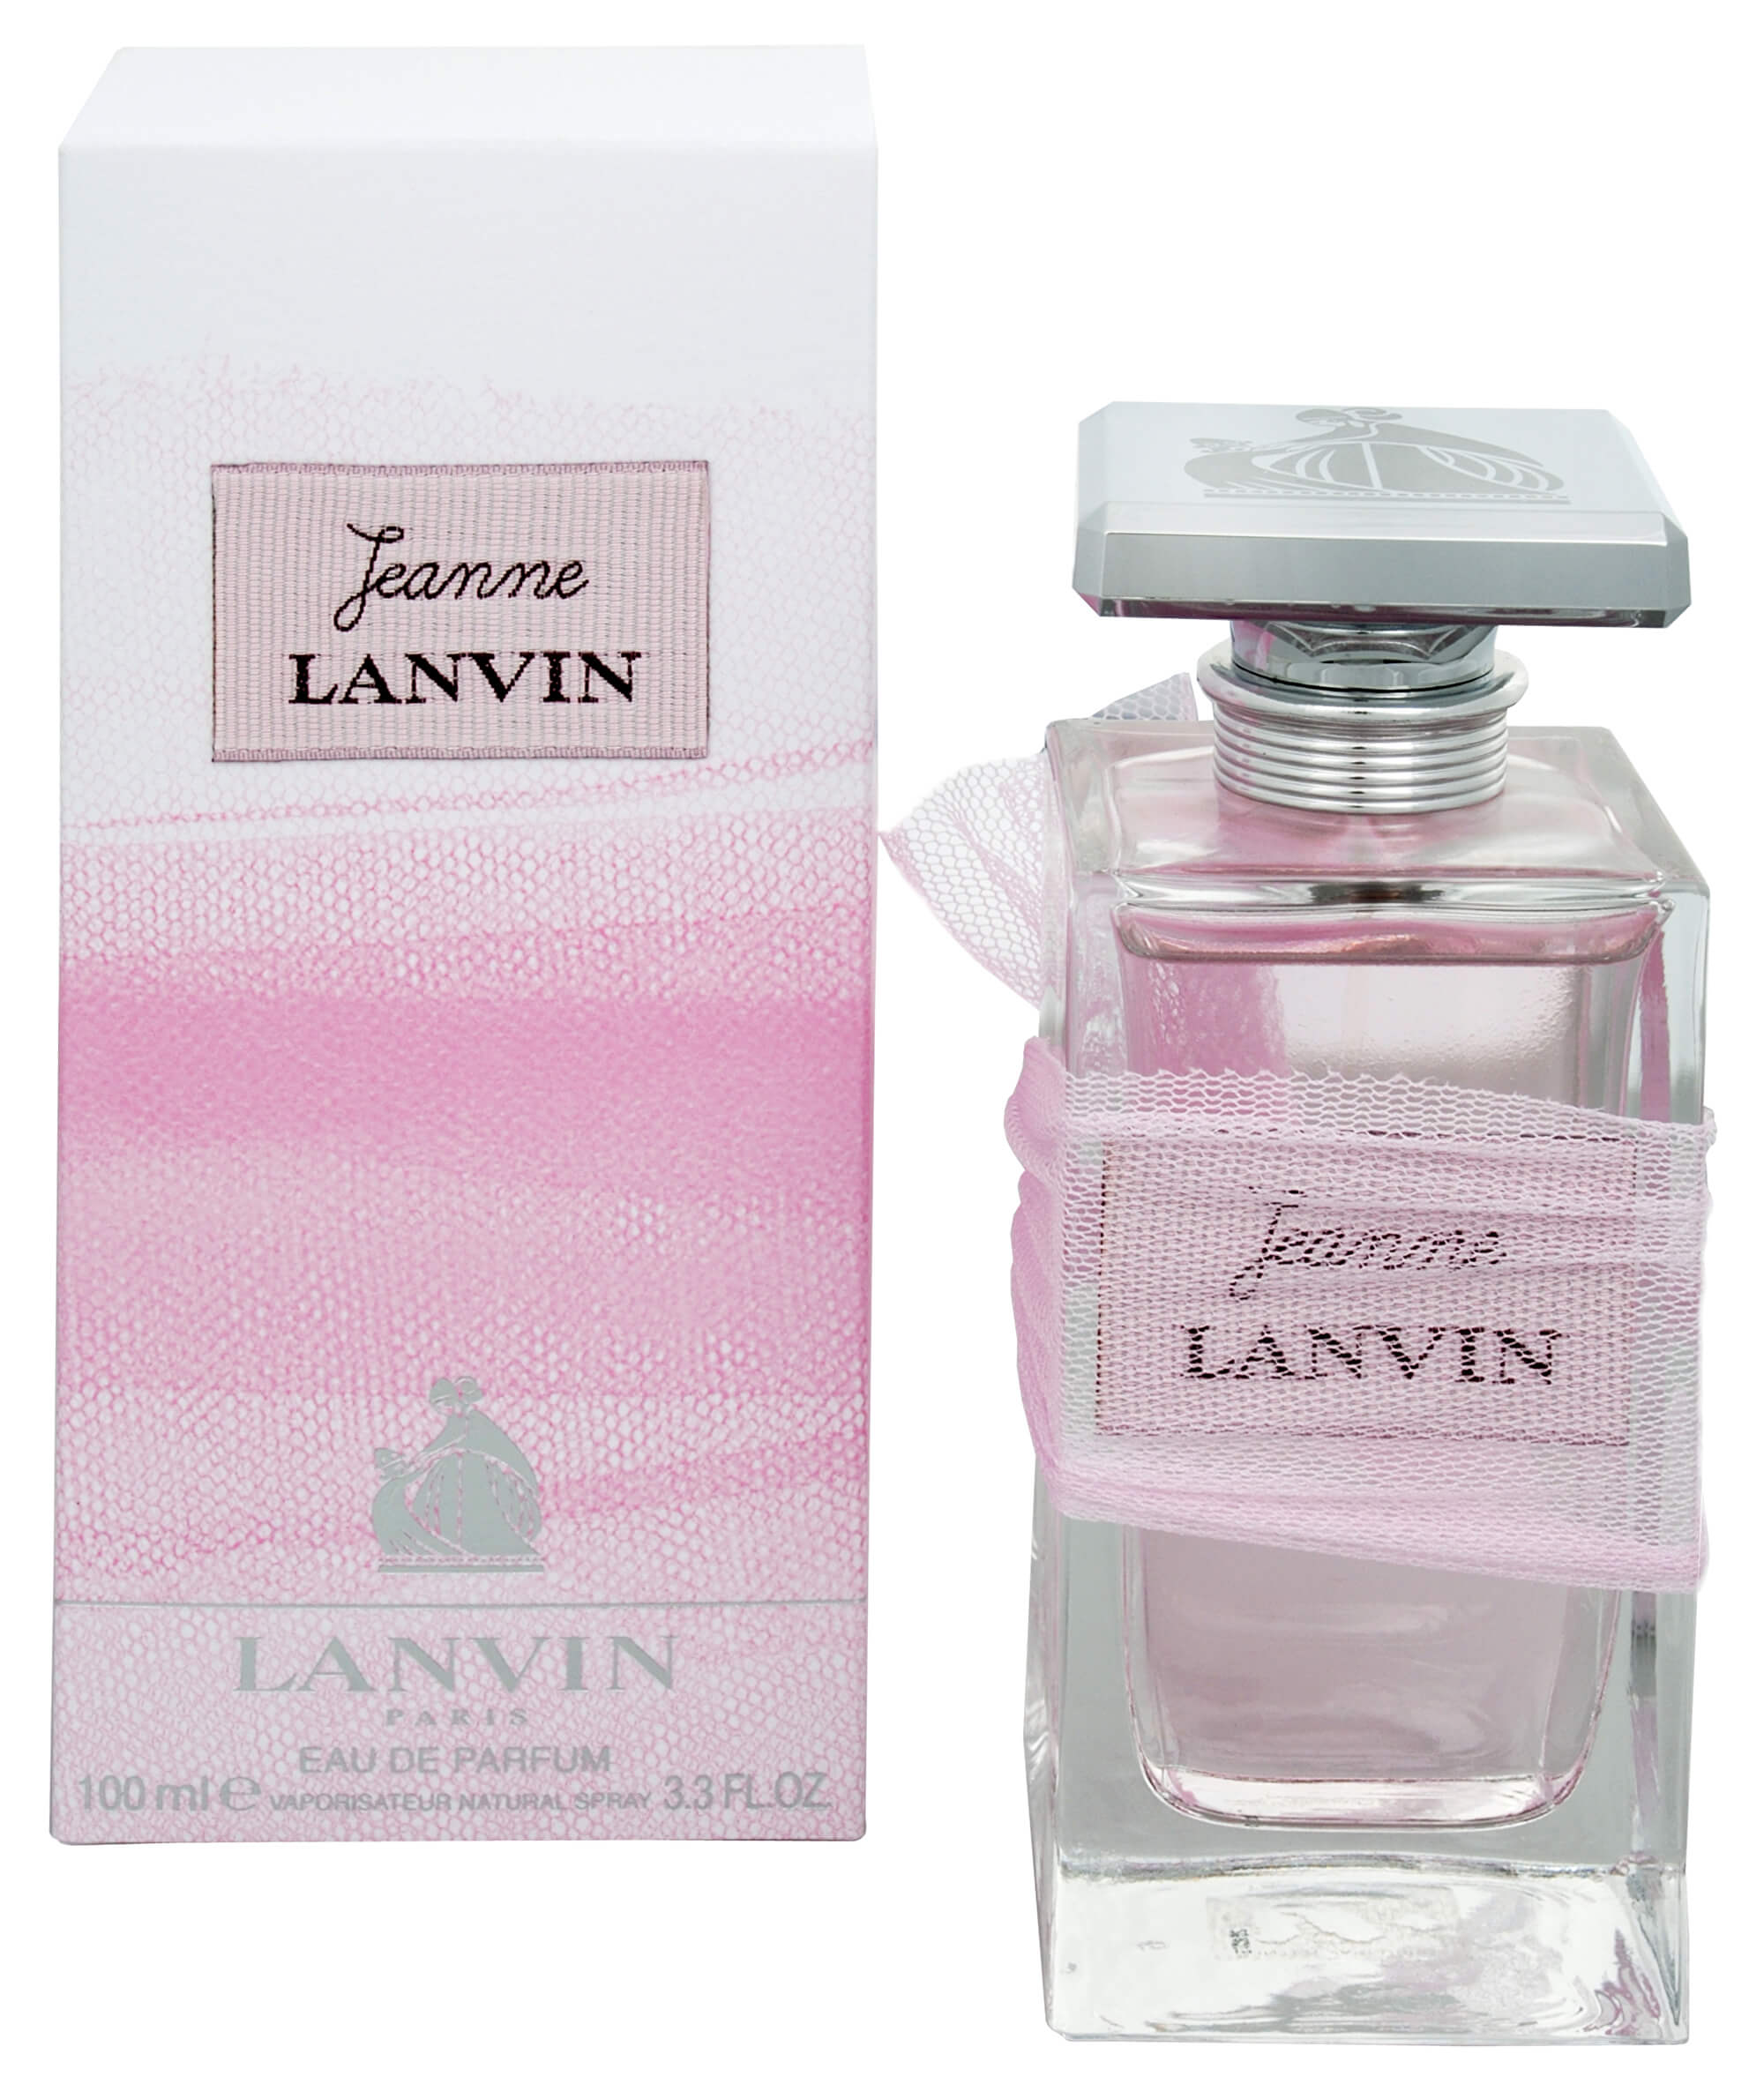 Lanvin Jeanne Lanvin - EDP 50 ml